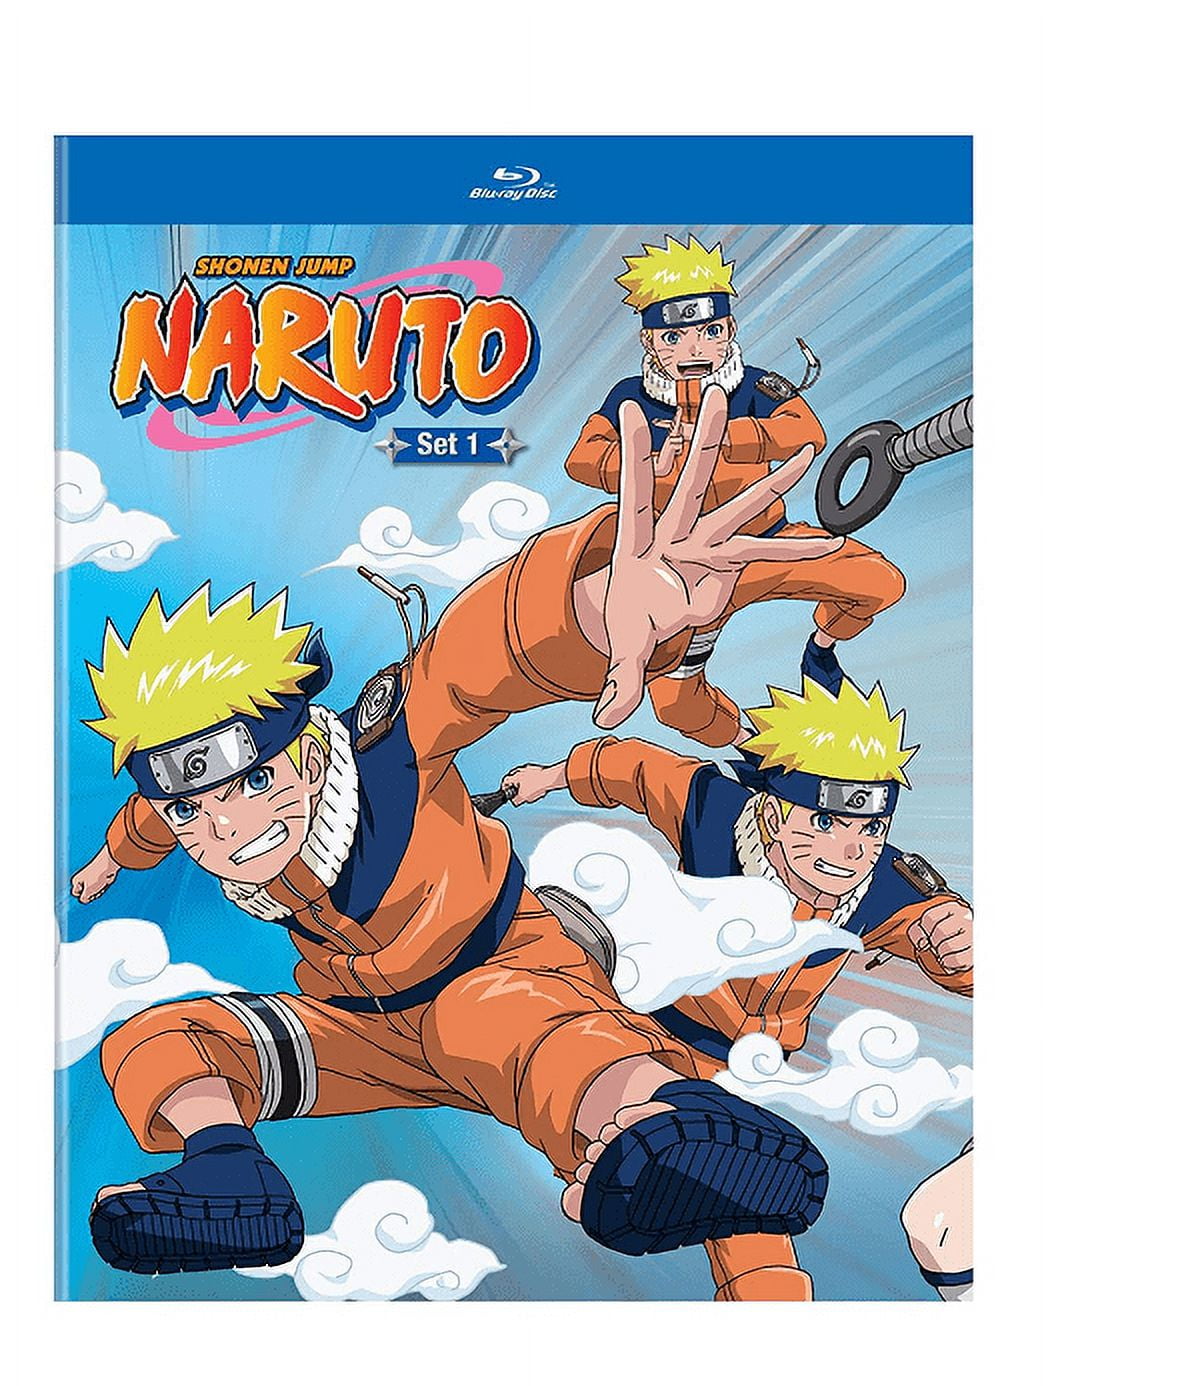 Boruto Naruto Next Generations Set 11 Blu-ray